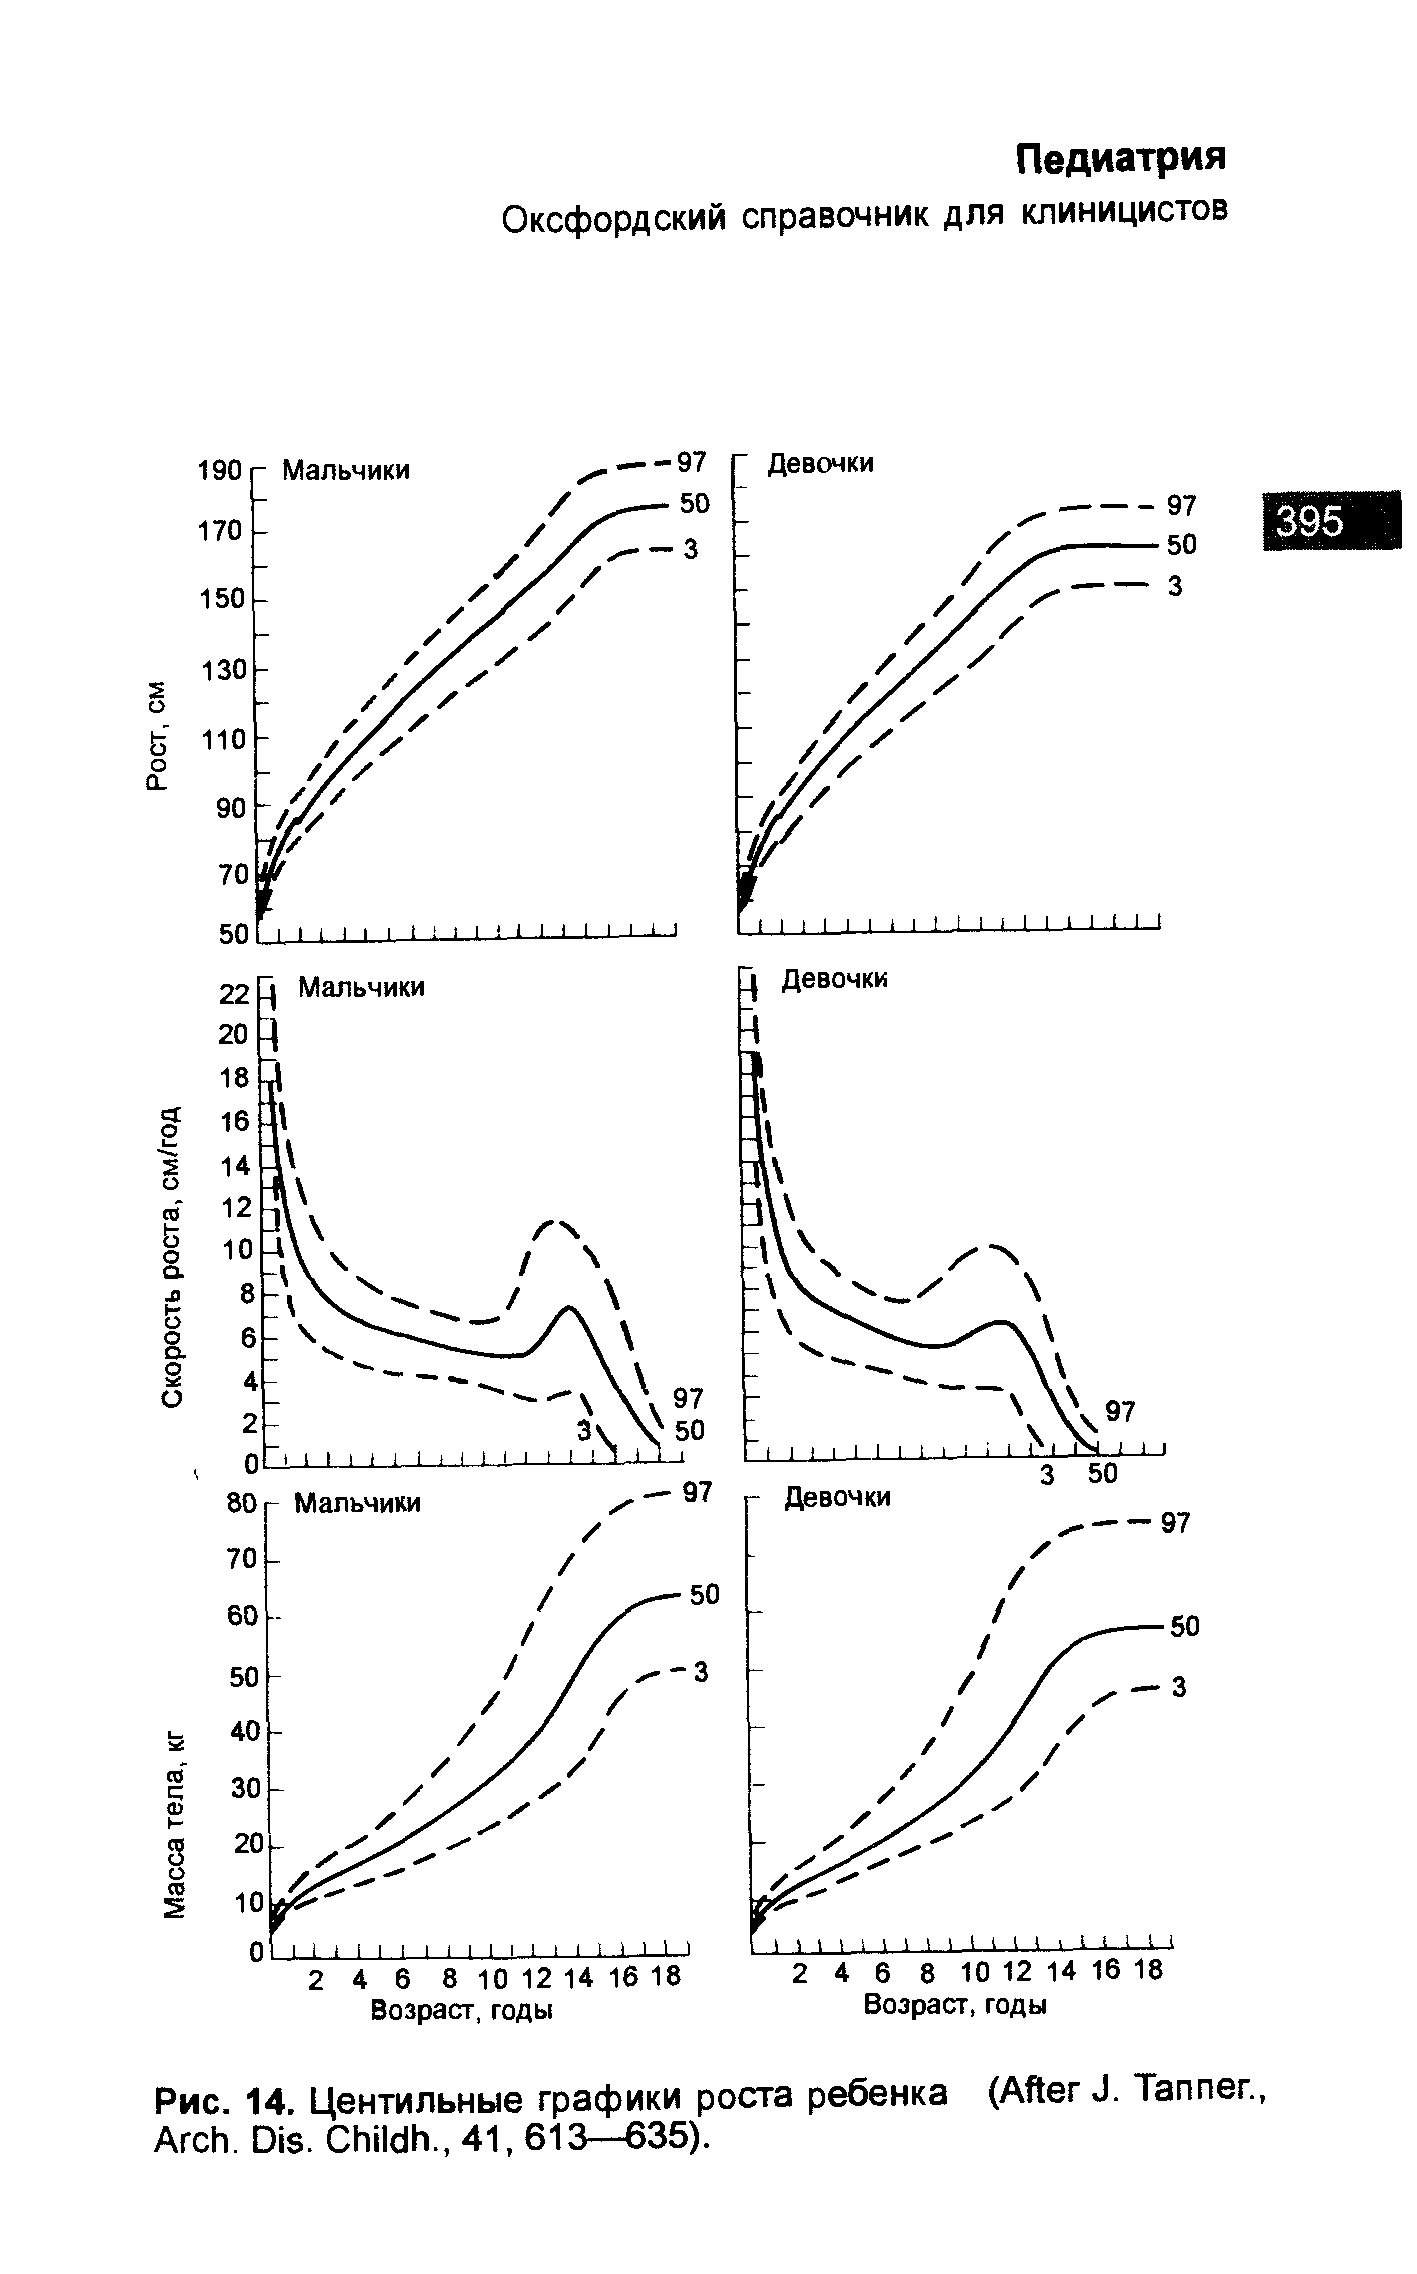 Рис. 14. Центильные графики роста ребенка (A J. T ., A . D . C , 41, 613—635).